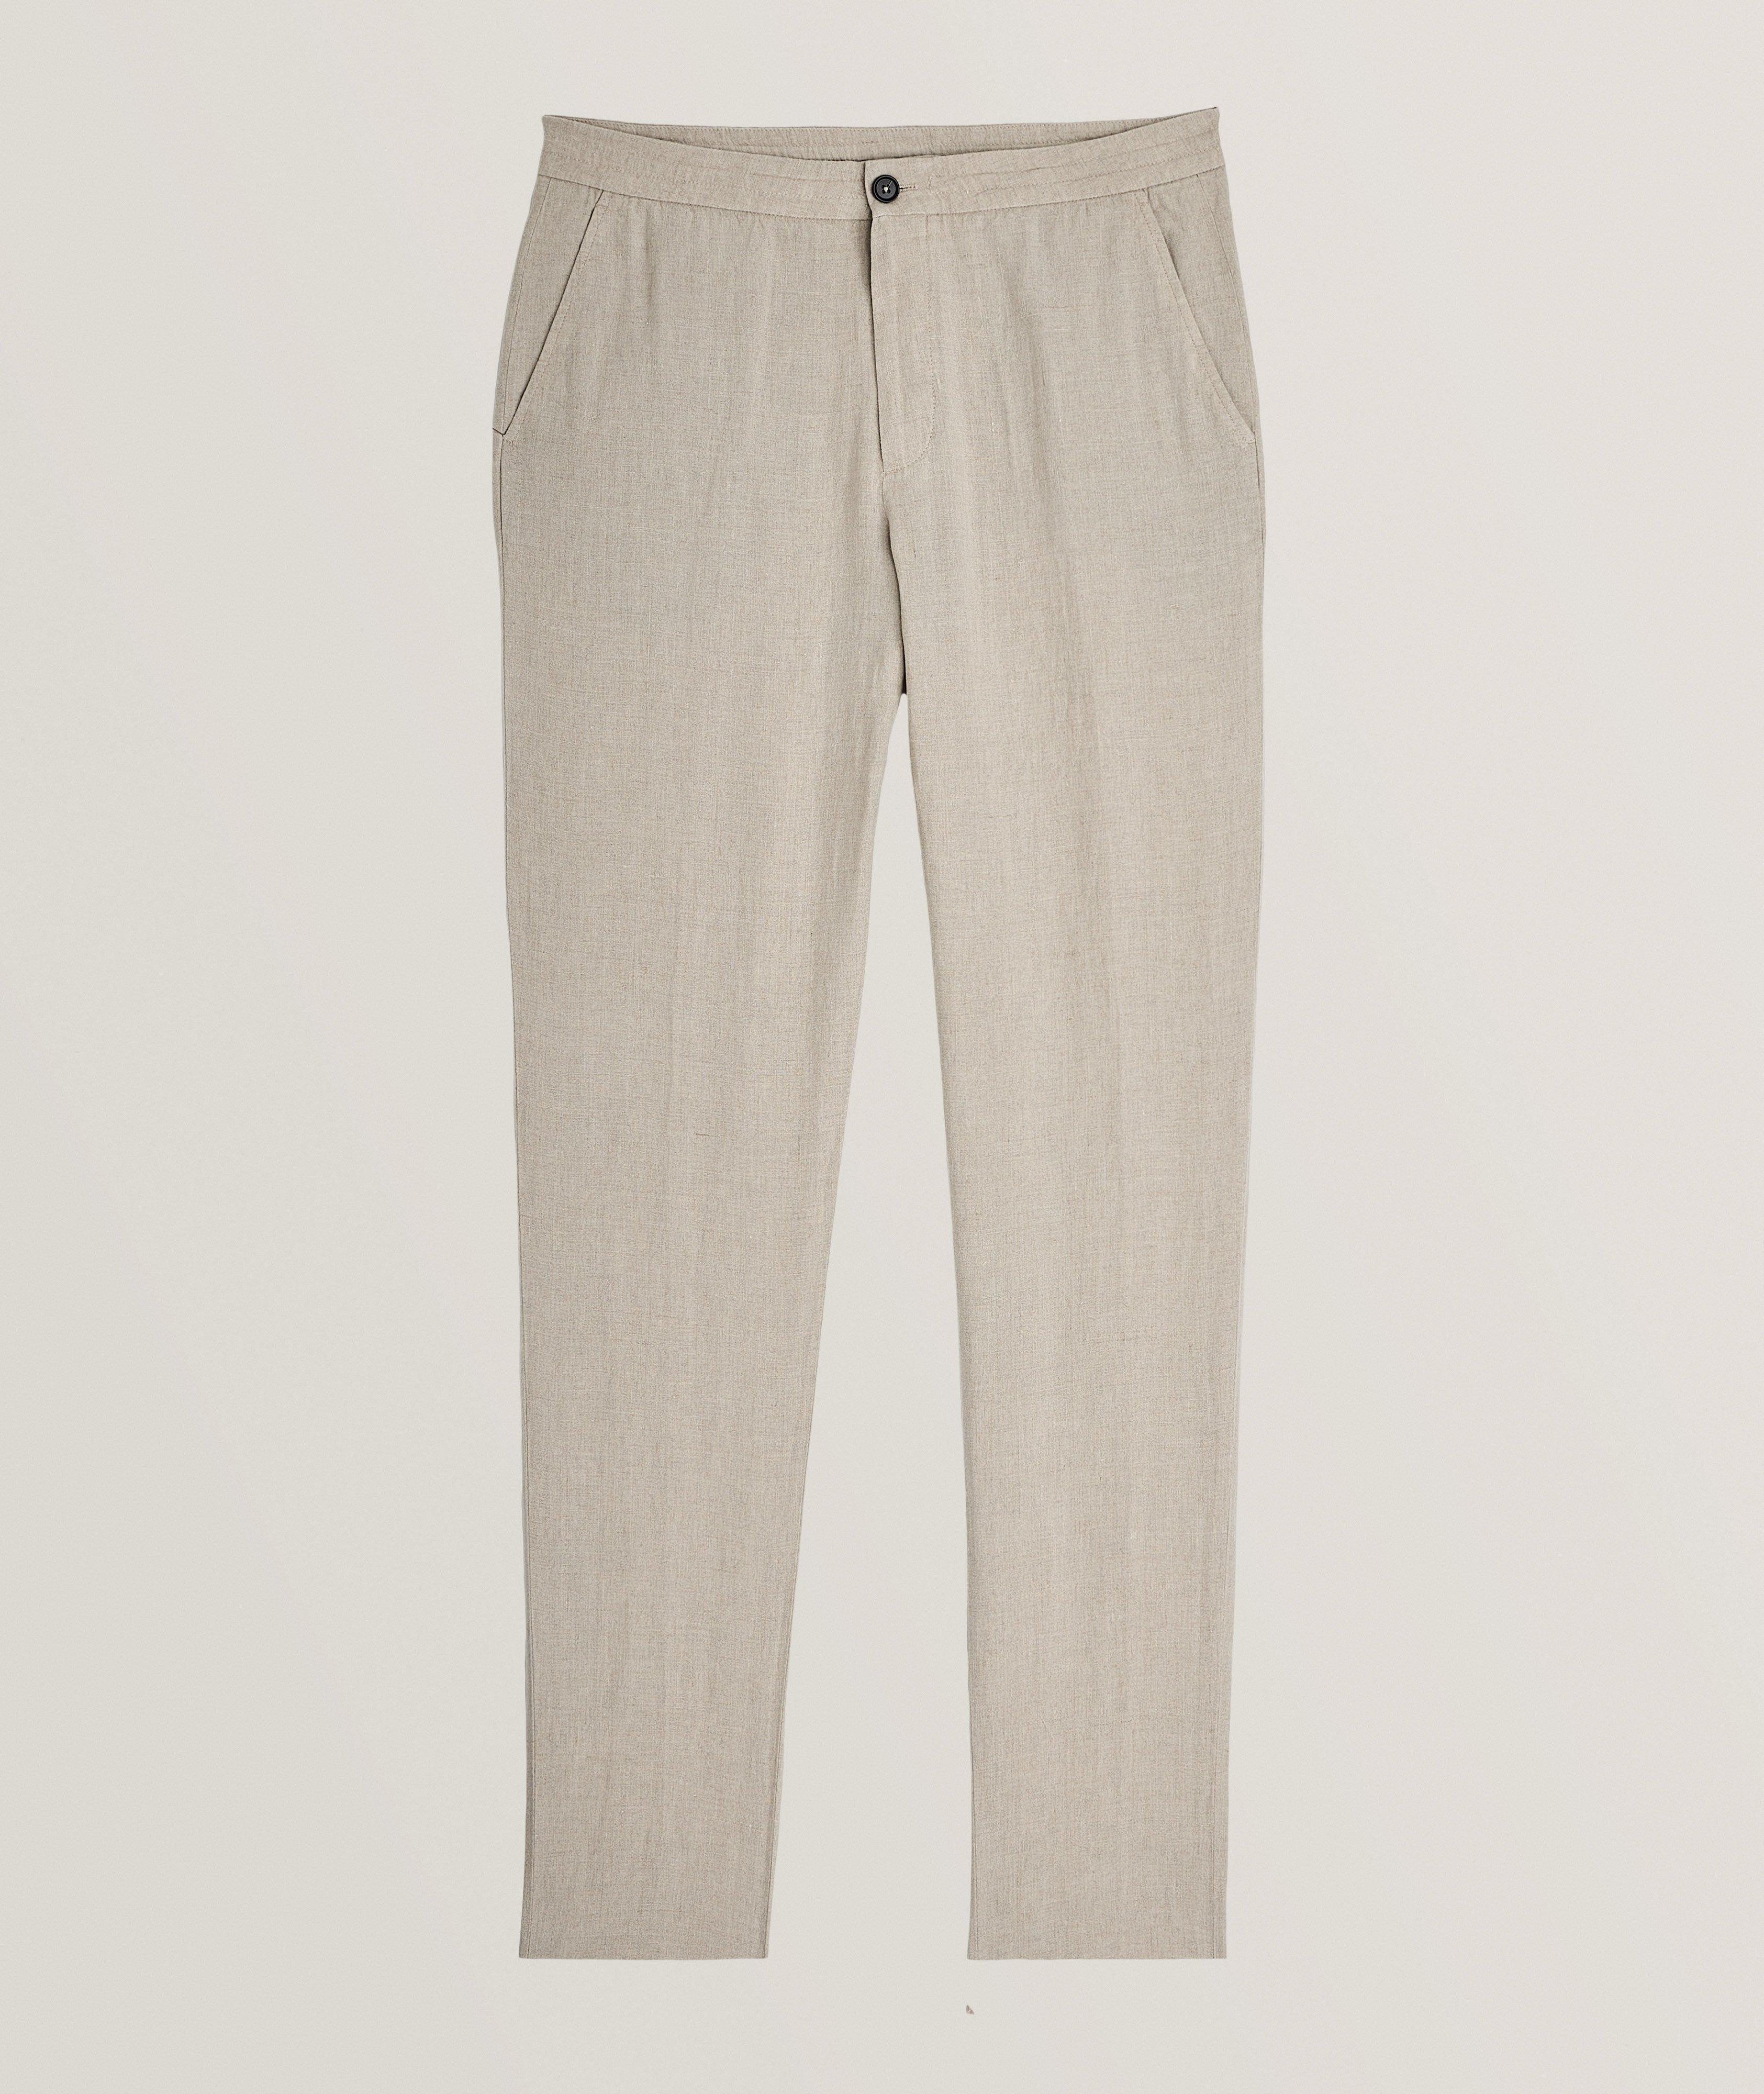 Zegna Linen Drawstring Pants | Pants | Harry Rosen